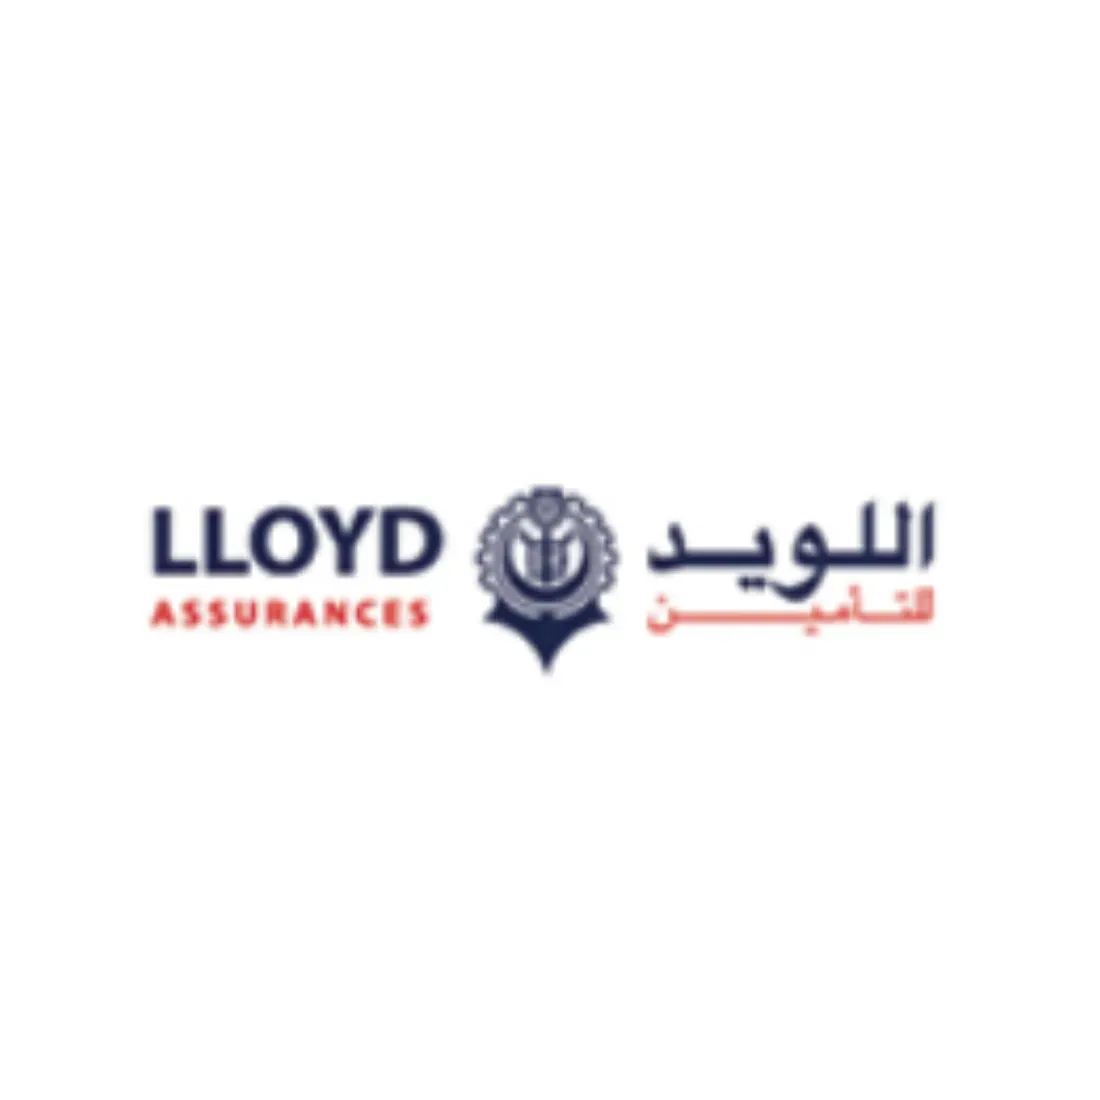 LLOYD-Wall Street English Tunisia Client